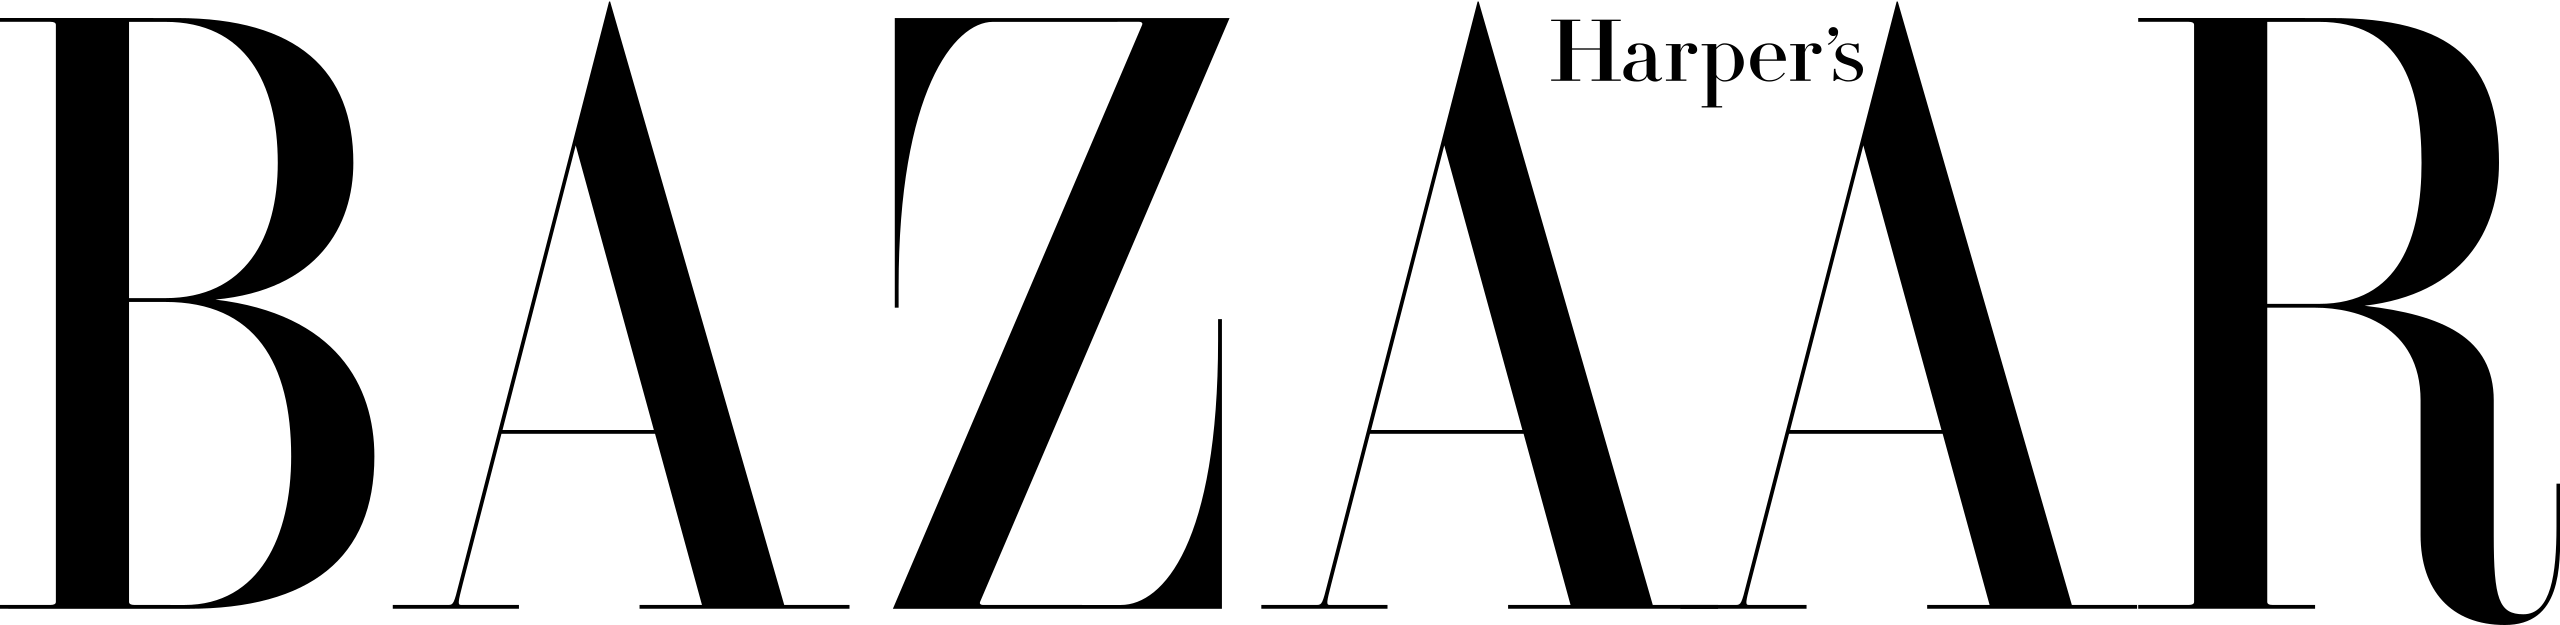 harpers-bazaar-logo - Latin American Fashion Awards